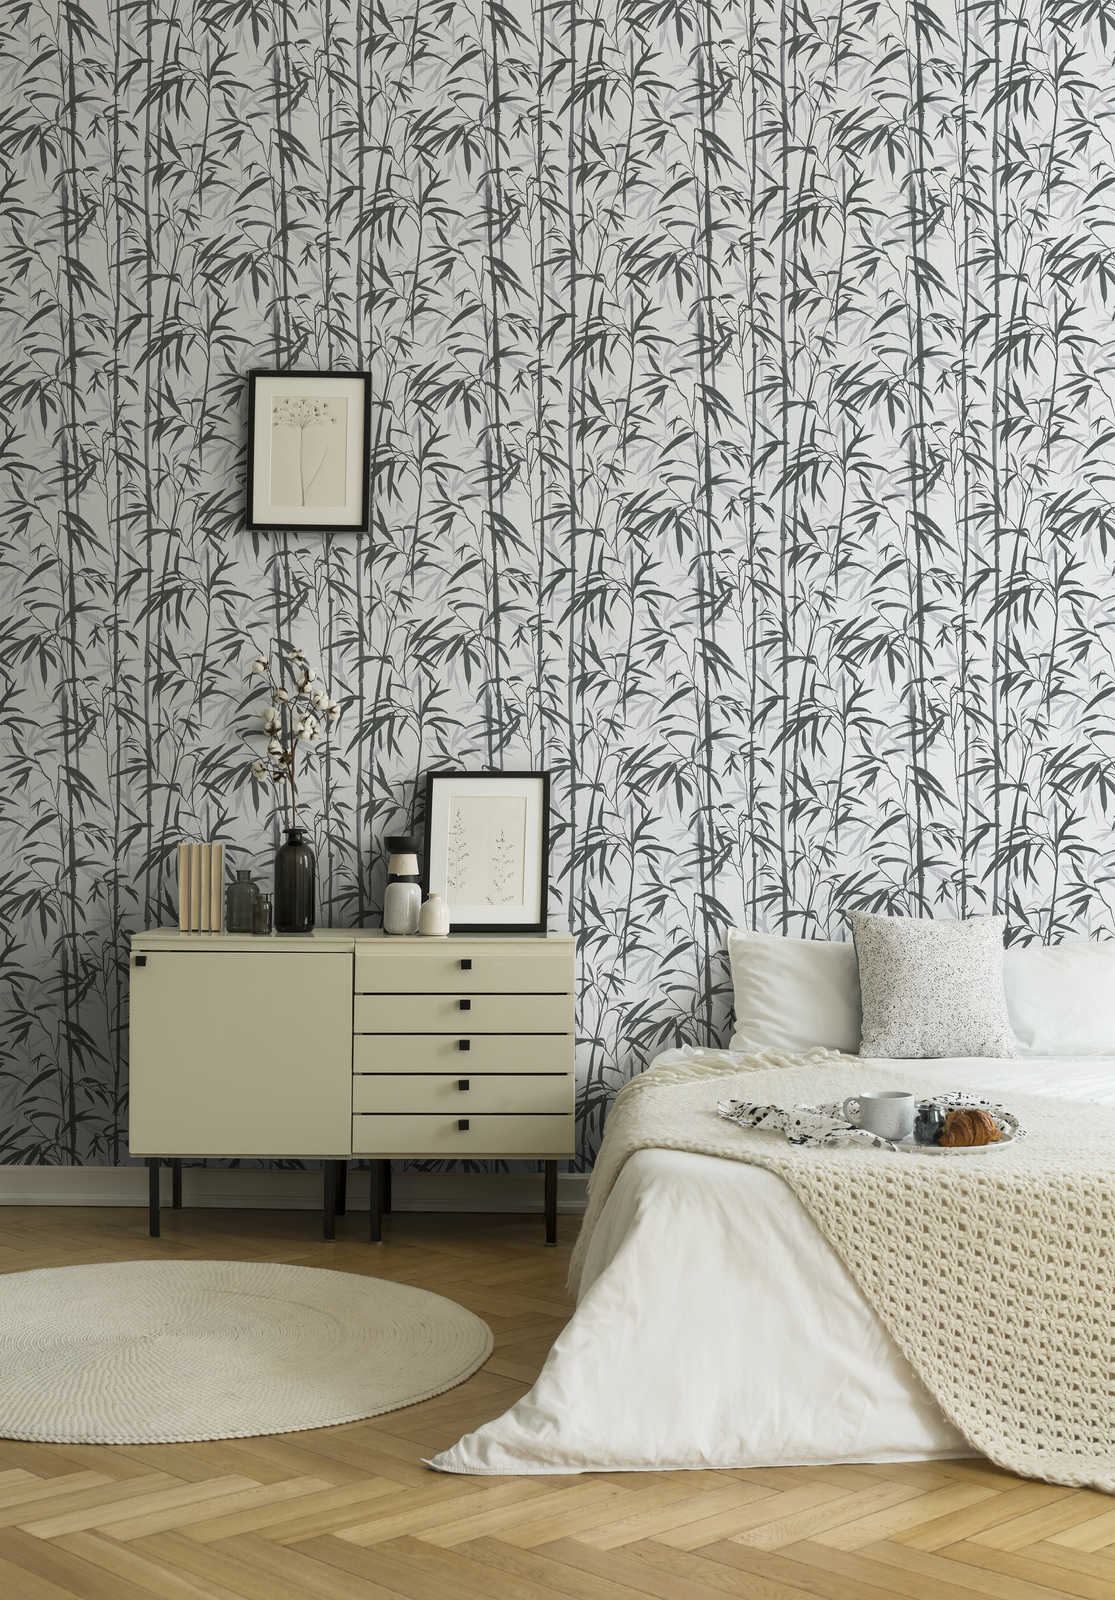             MICHALSKY non-woven wallpaper bamboo design in black and white
        